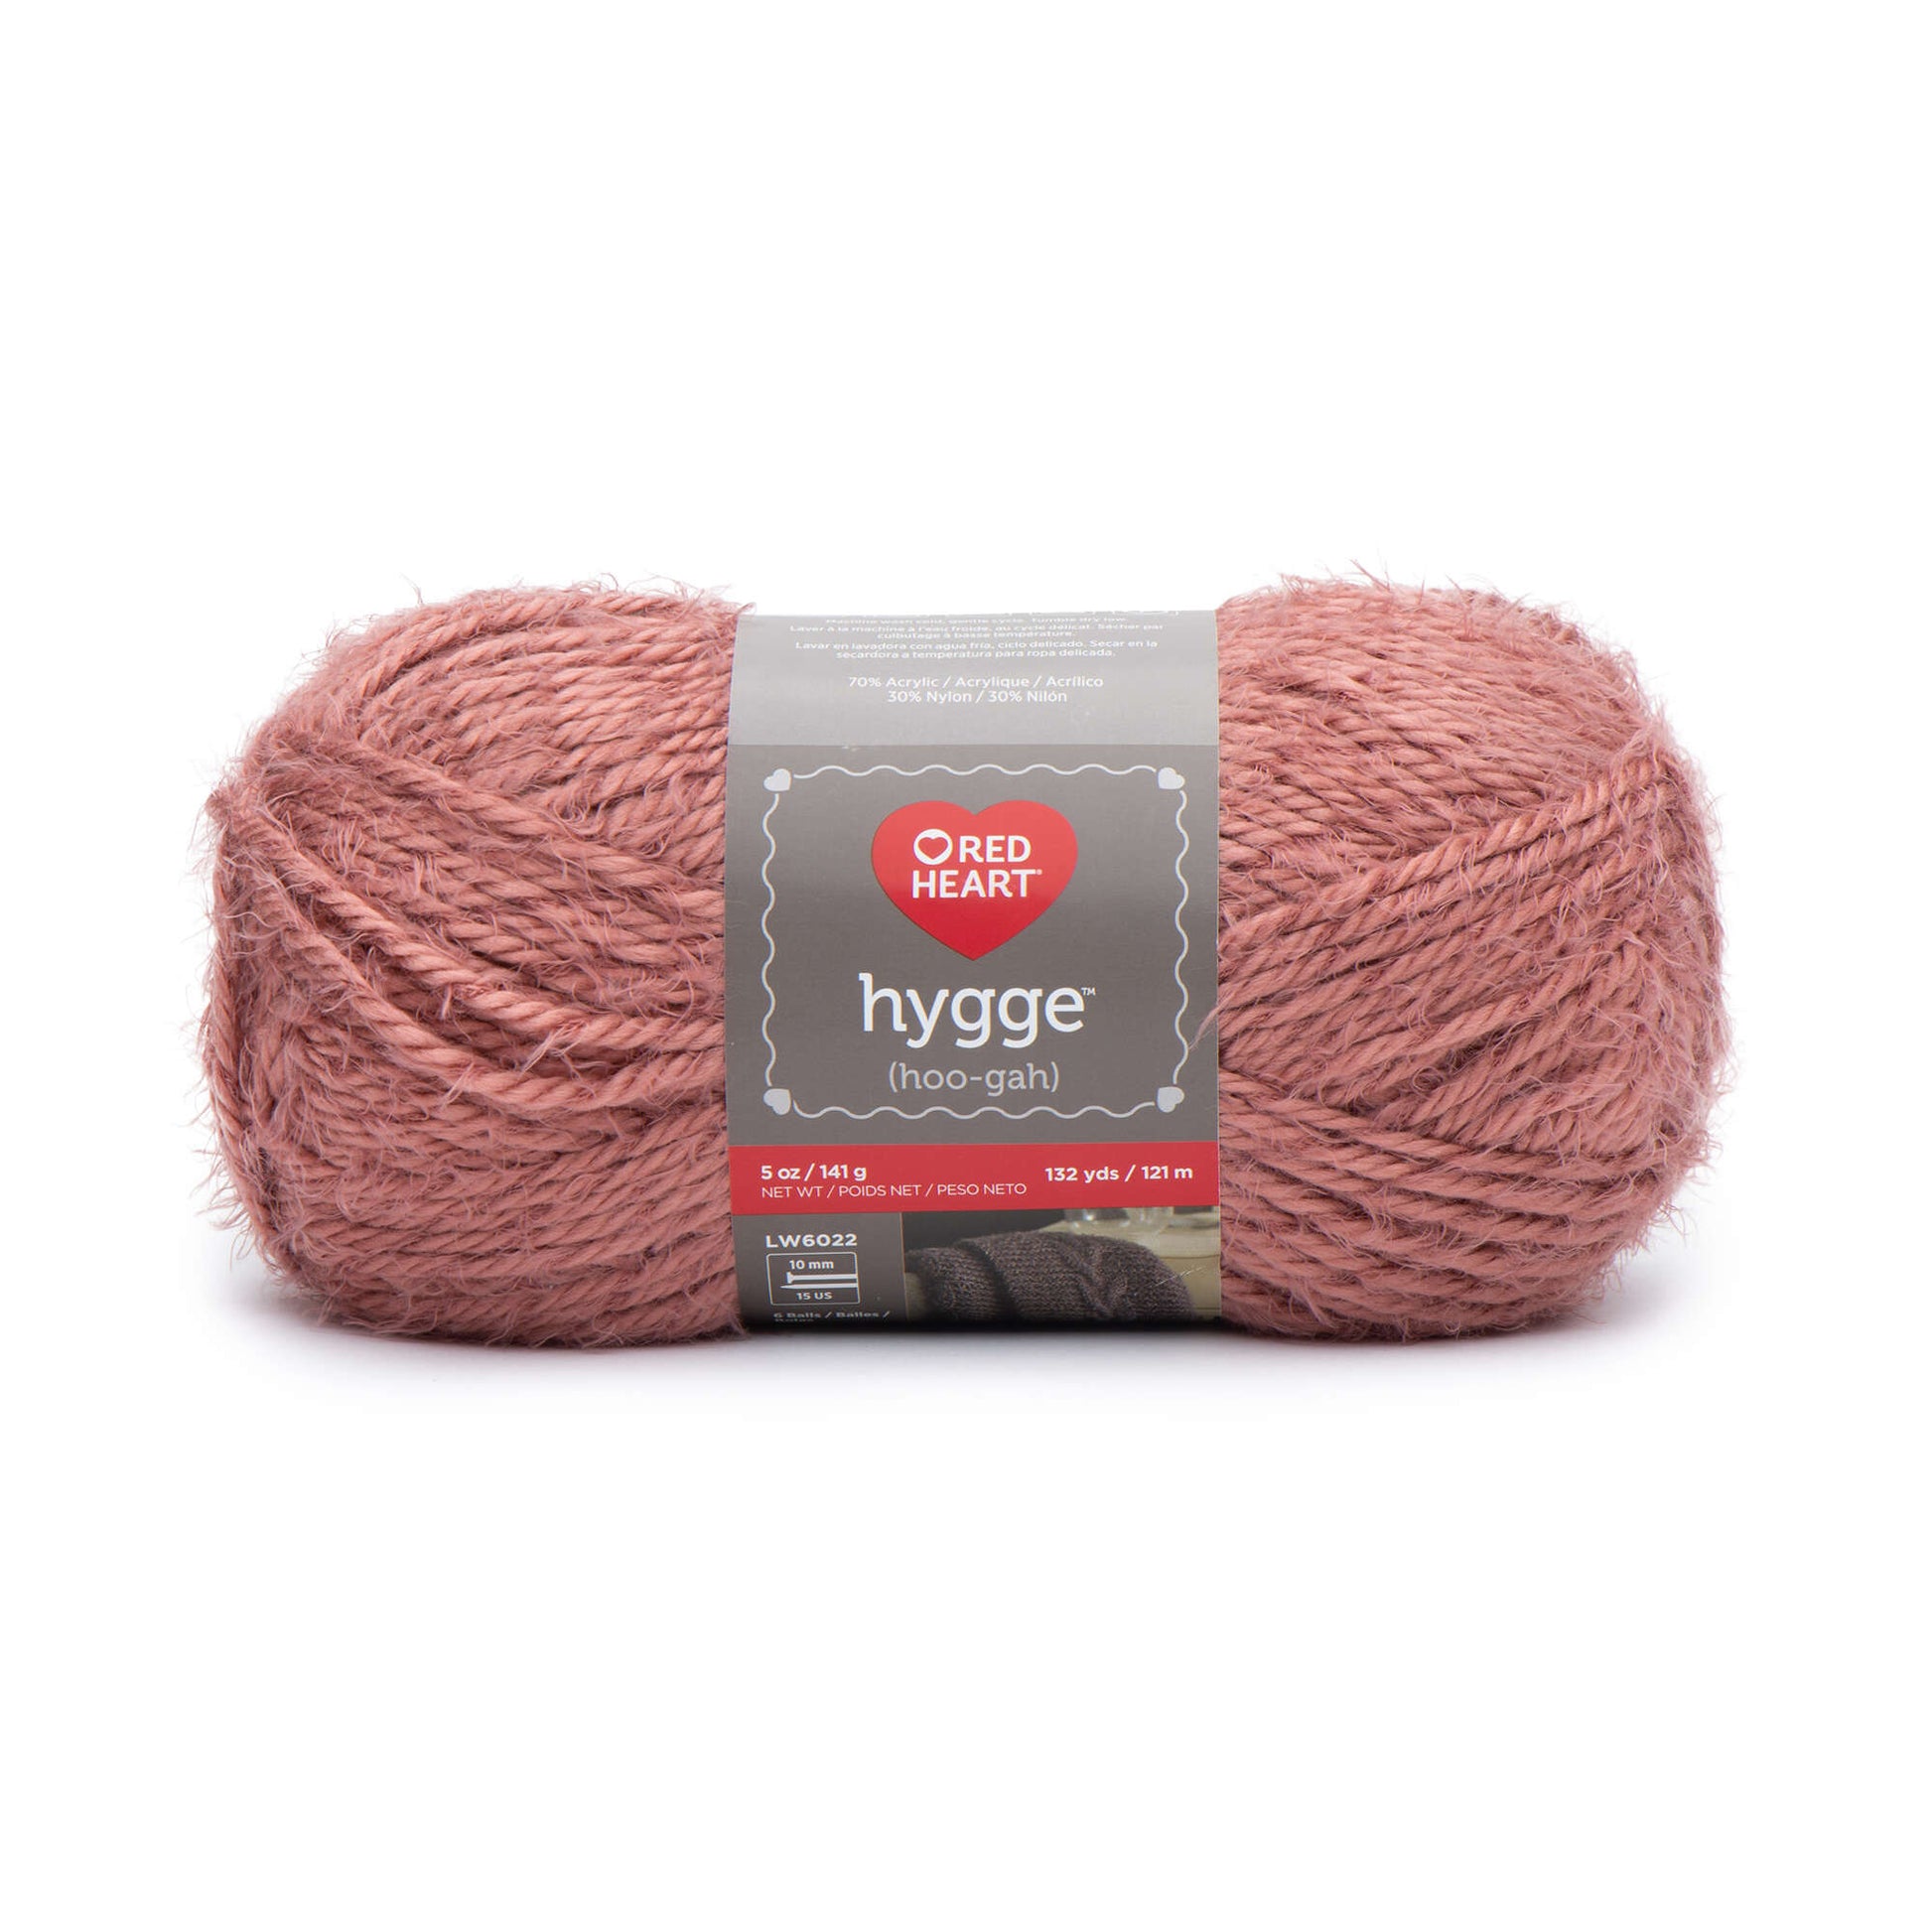 Red Heart Hygge Yarn (141g/5oz) - Discontinued Shades